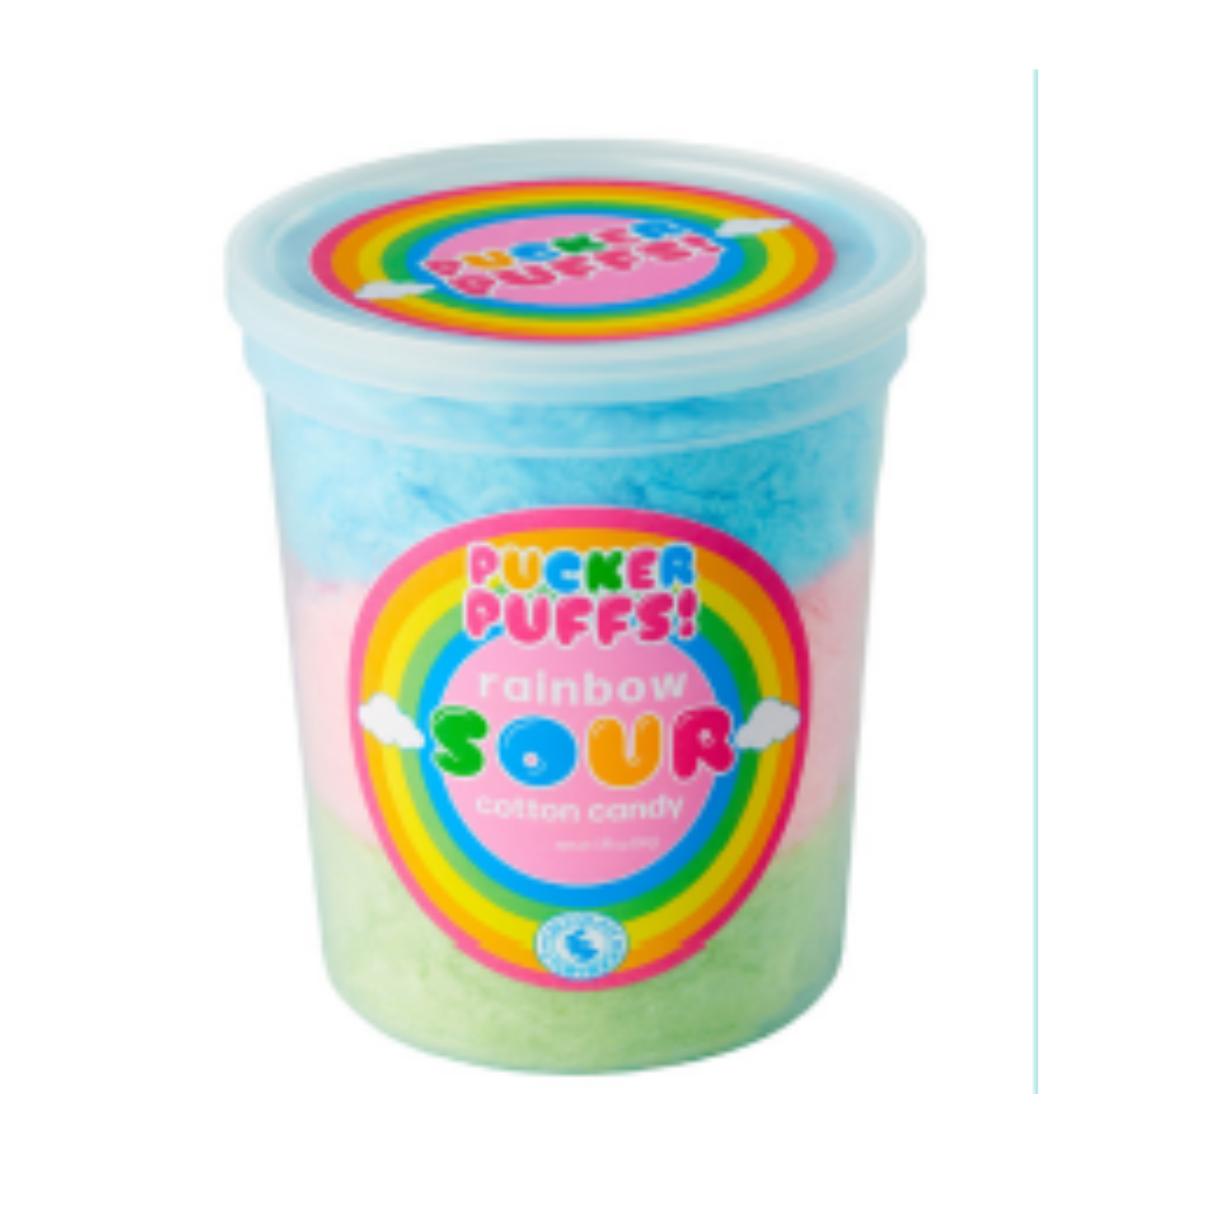 Pucker Puffs Sour Rainbow Cotton Candy 1.75oz - 12ct